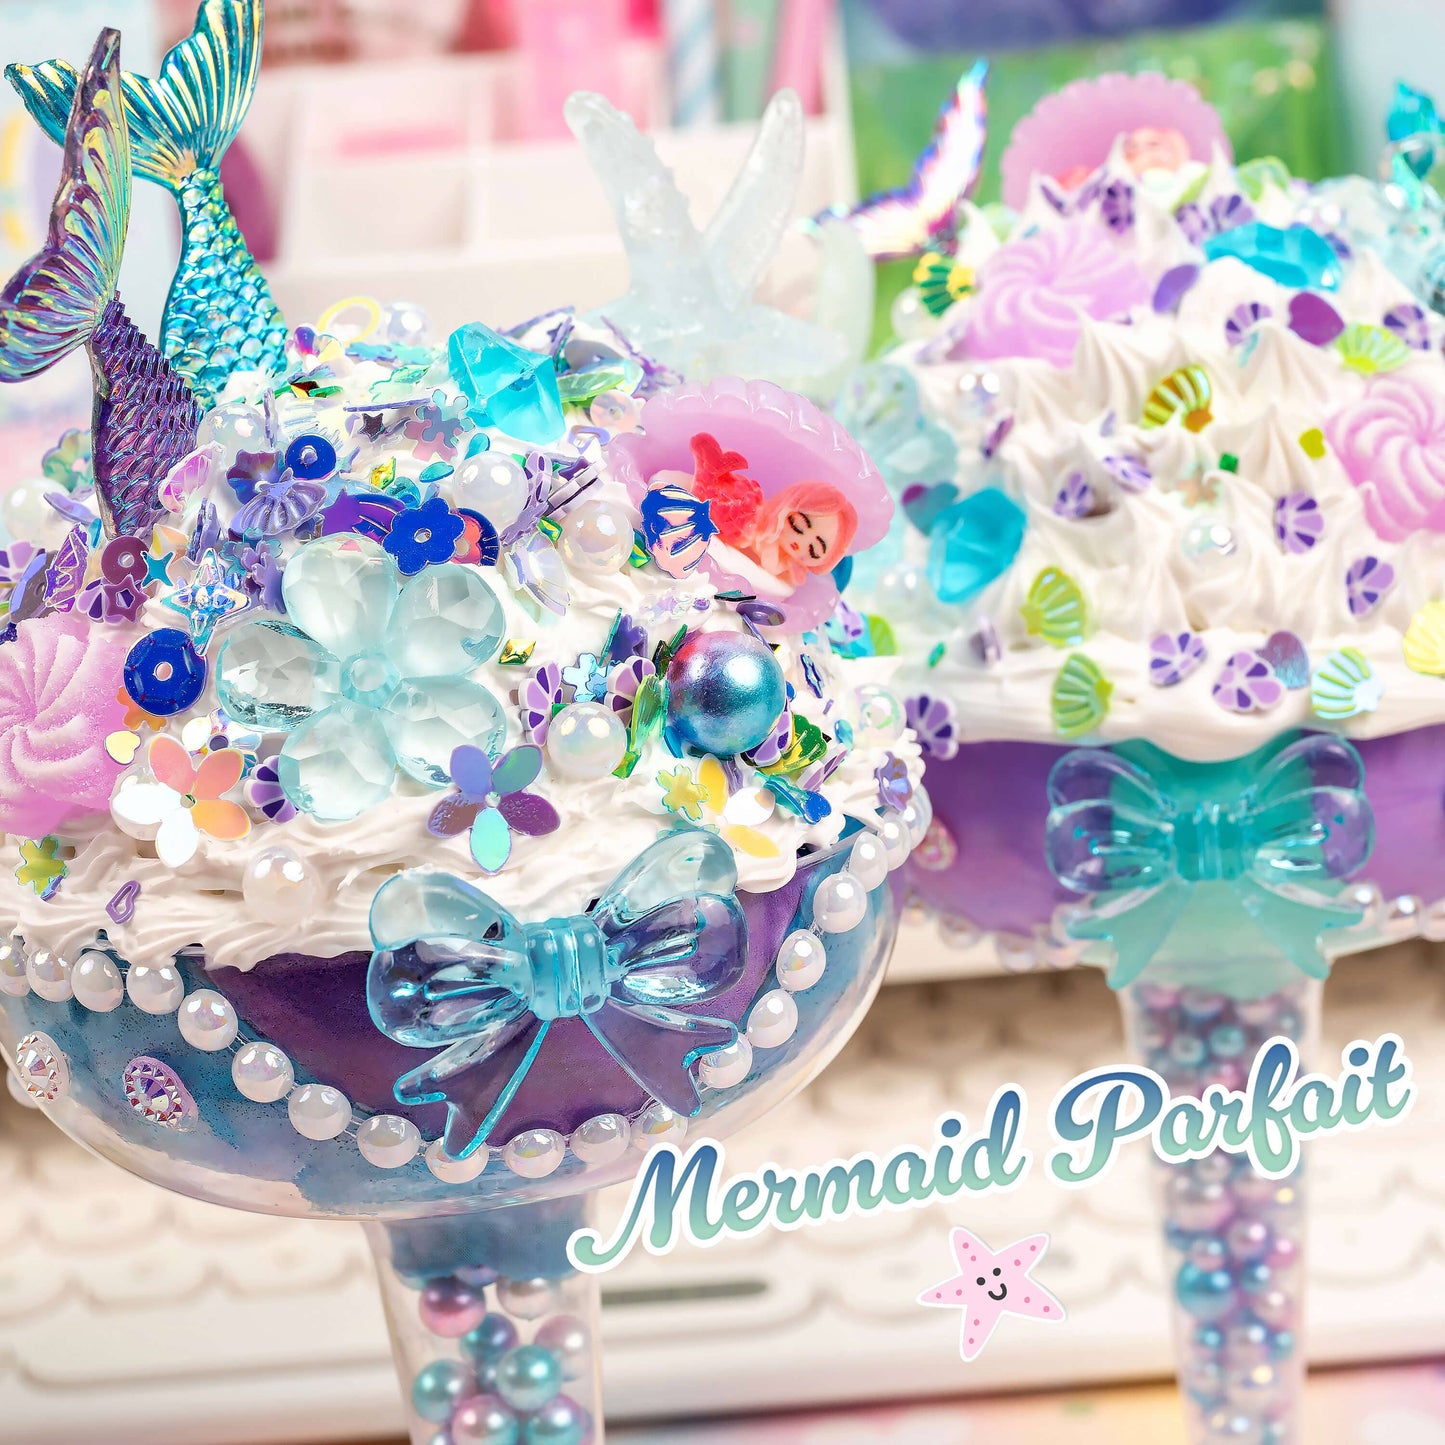 Clay Kit - Play & Display Mermaid Parfait Cafe